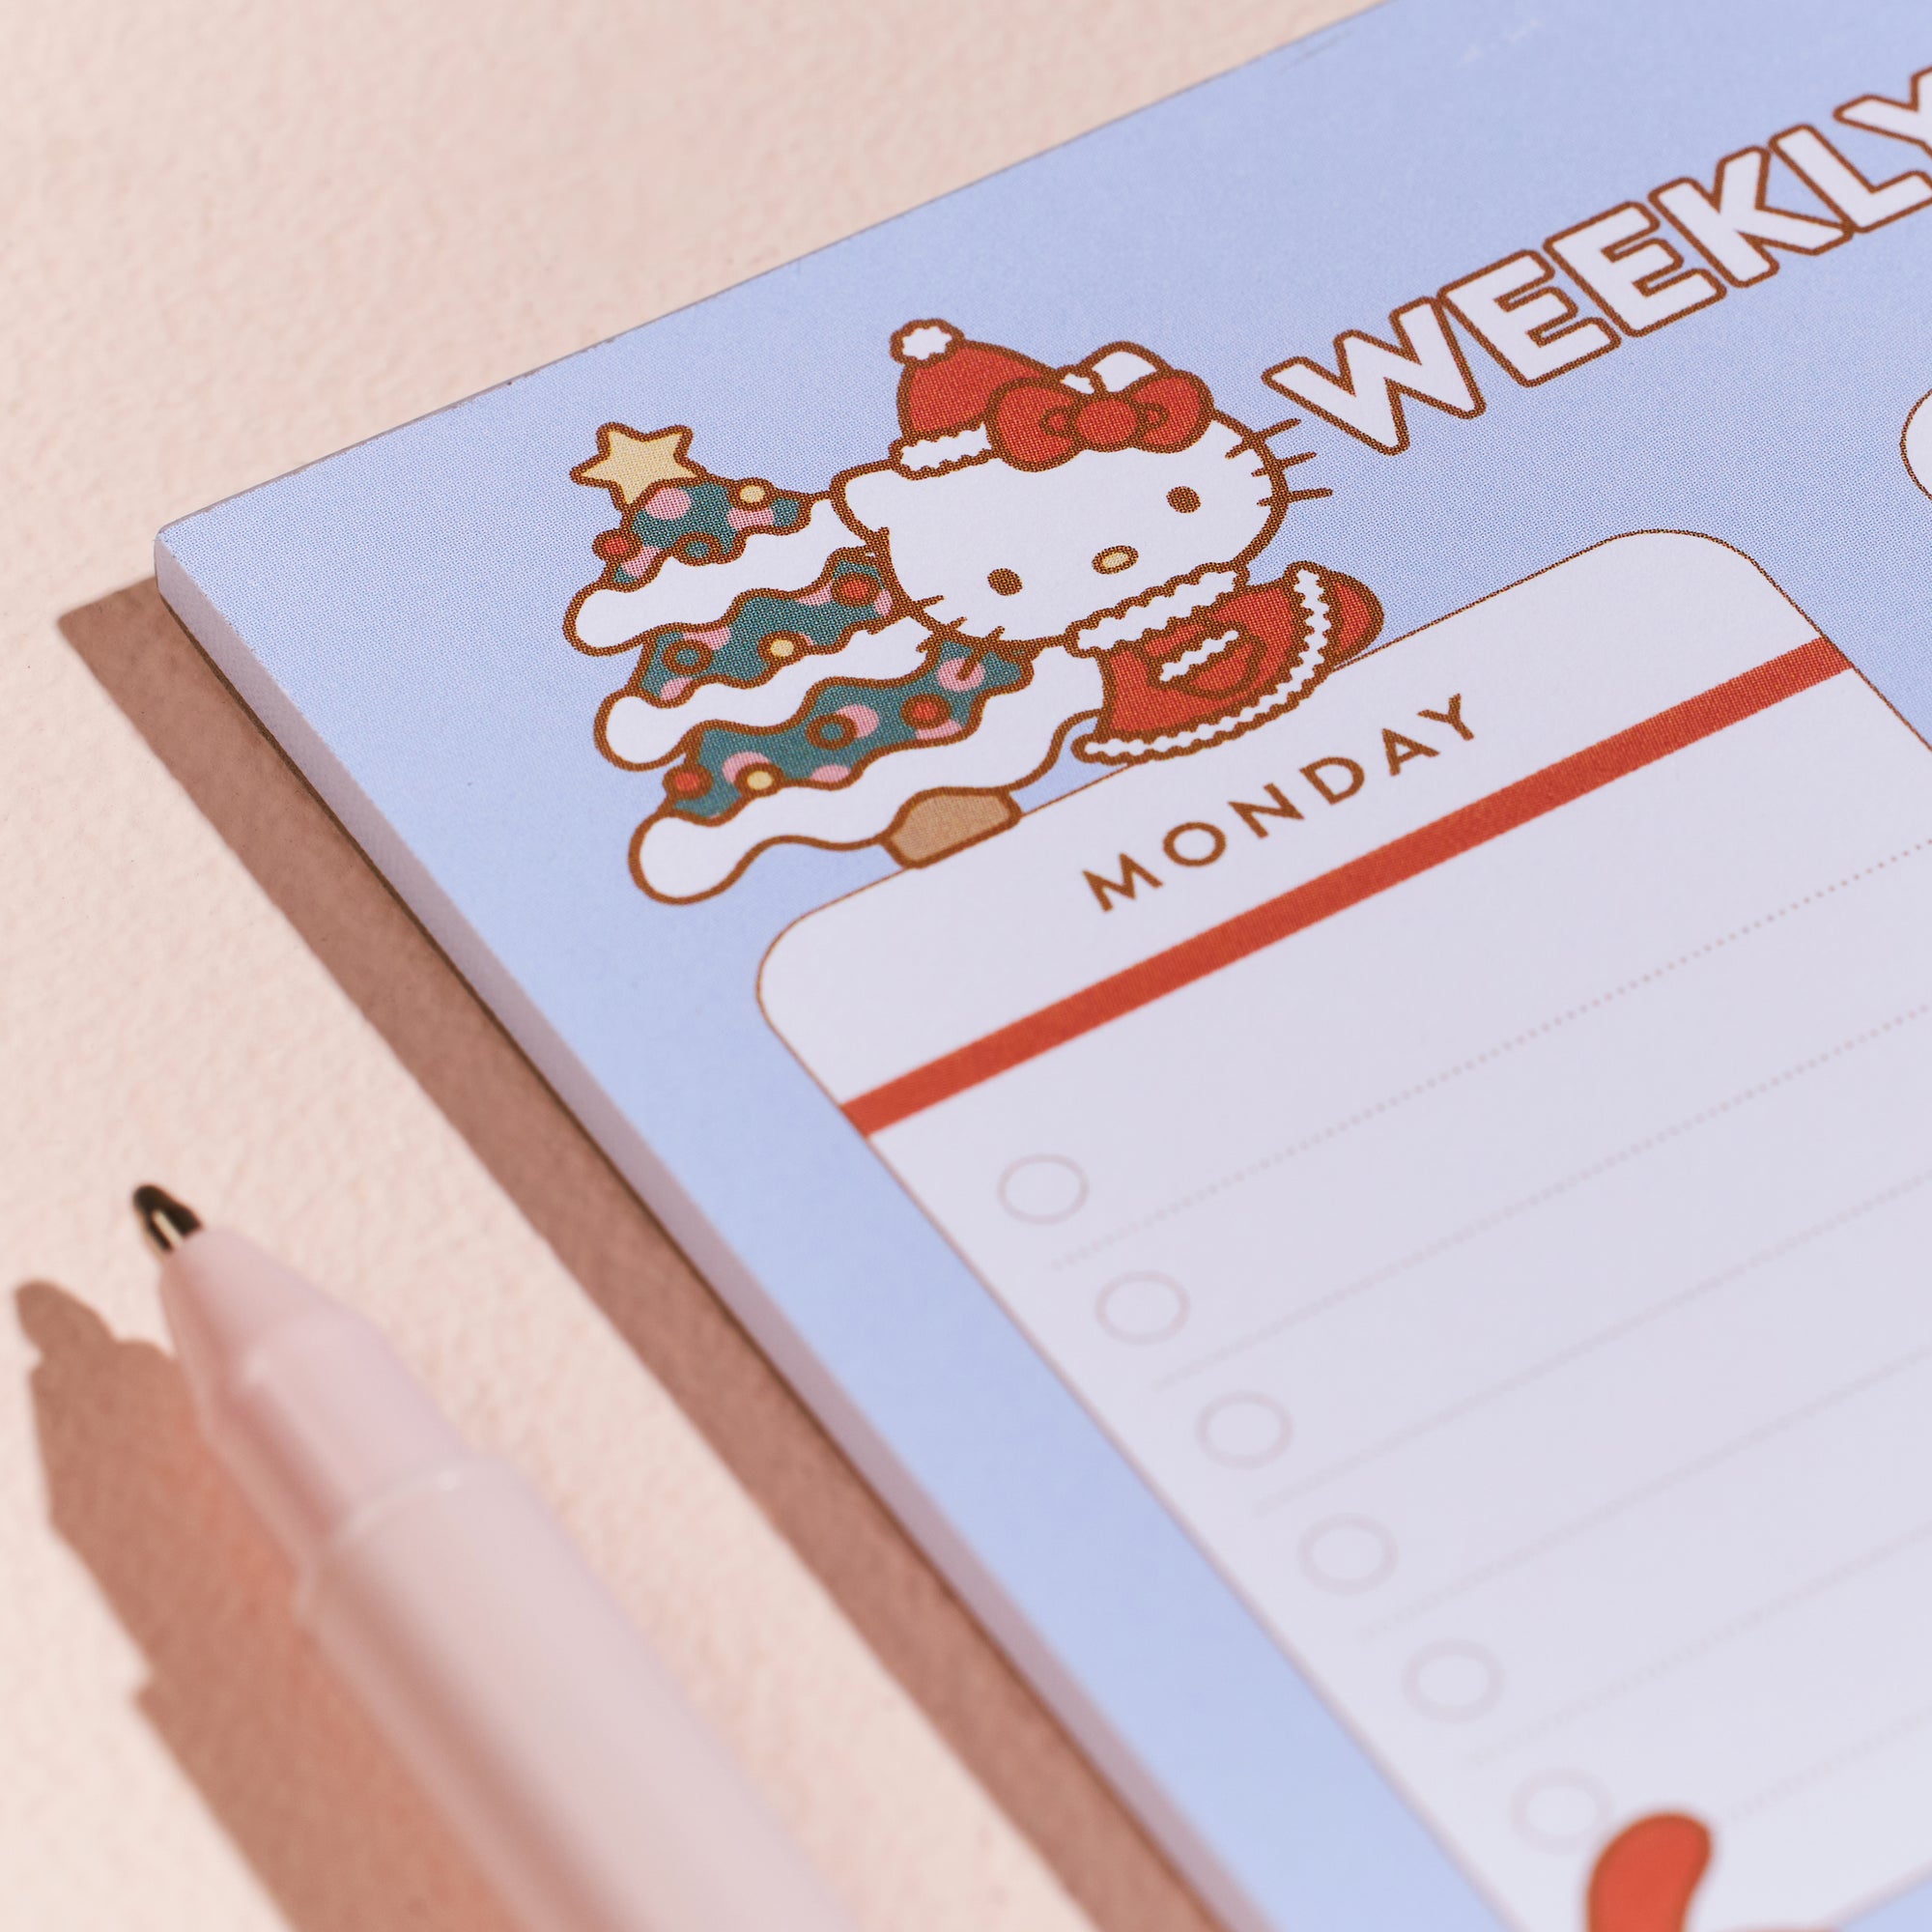 Hello Kitty and Friends x Erin Condren Holiday Checklist Notepad Stationery ERIN CONDREN   